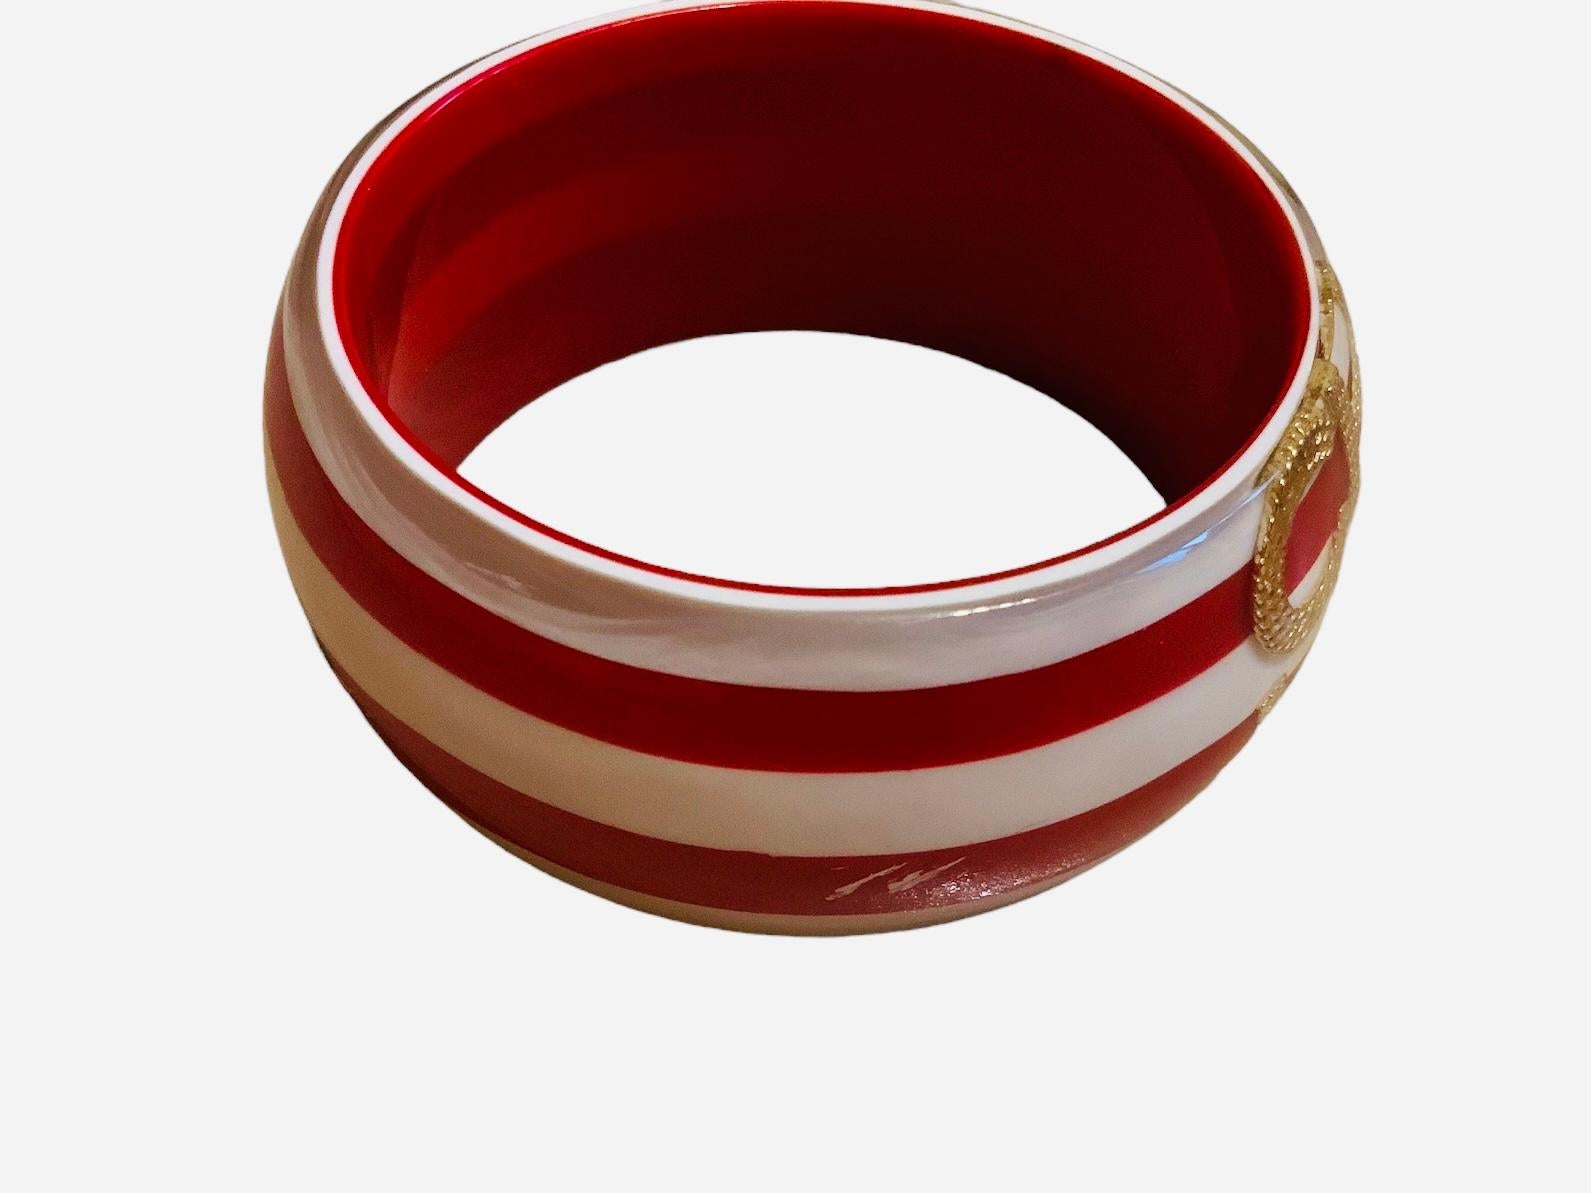 CH Magnet bracelet black - CH Carolina Herrera United States